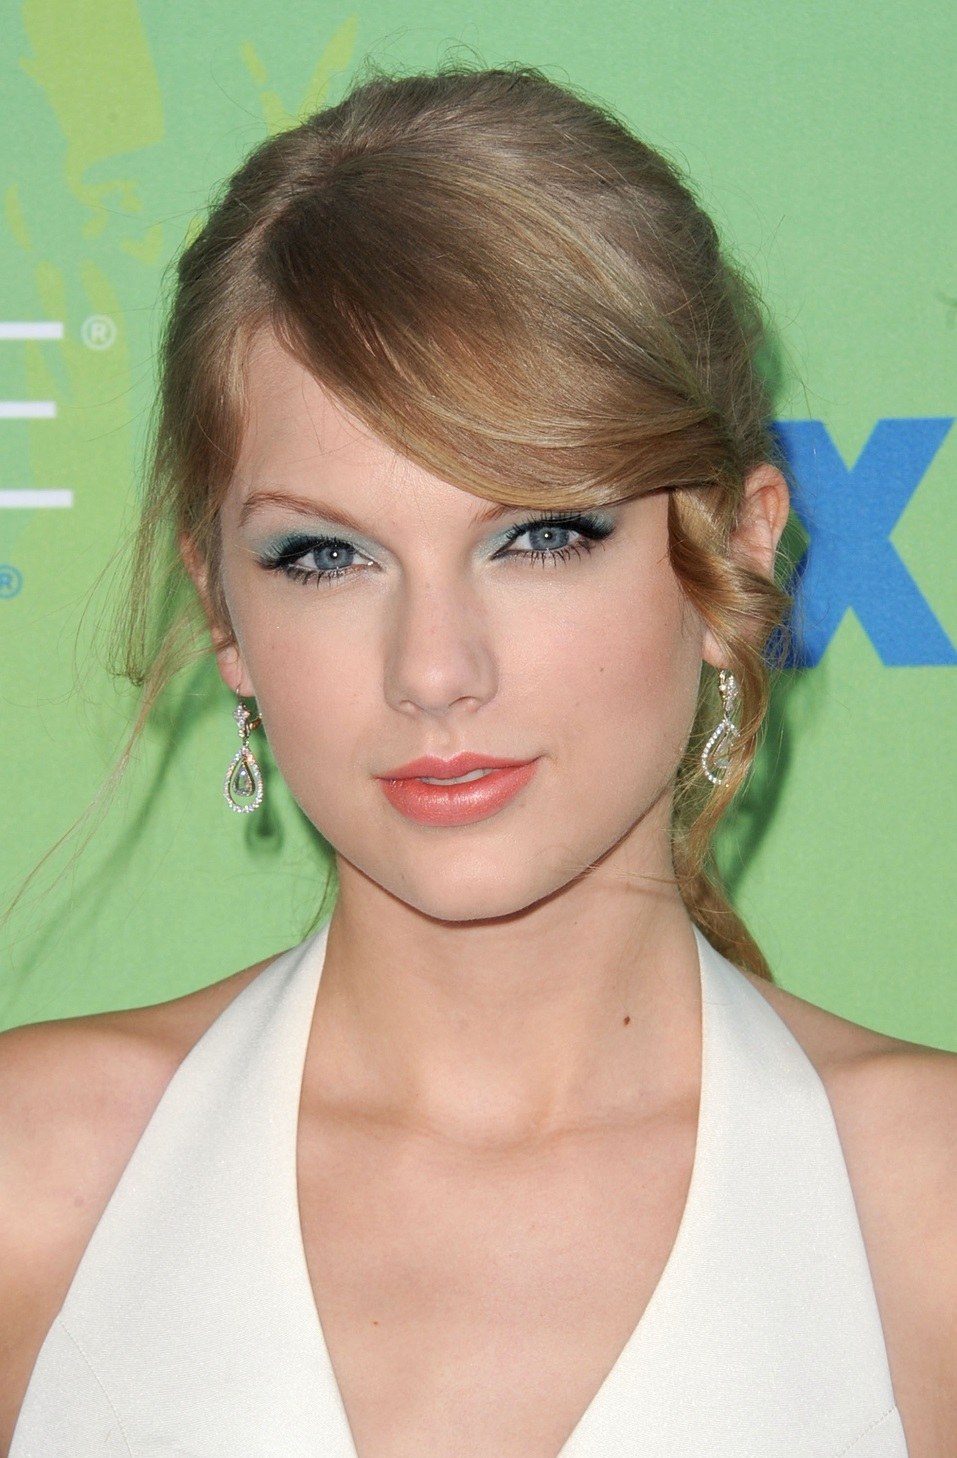 Musician Taylor Swift